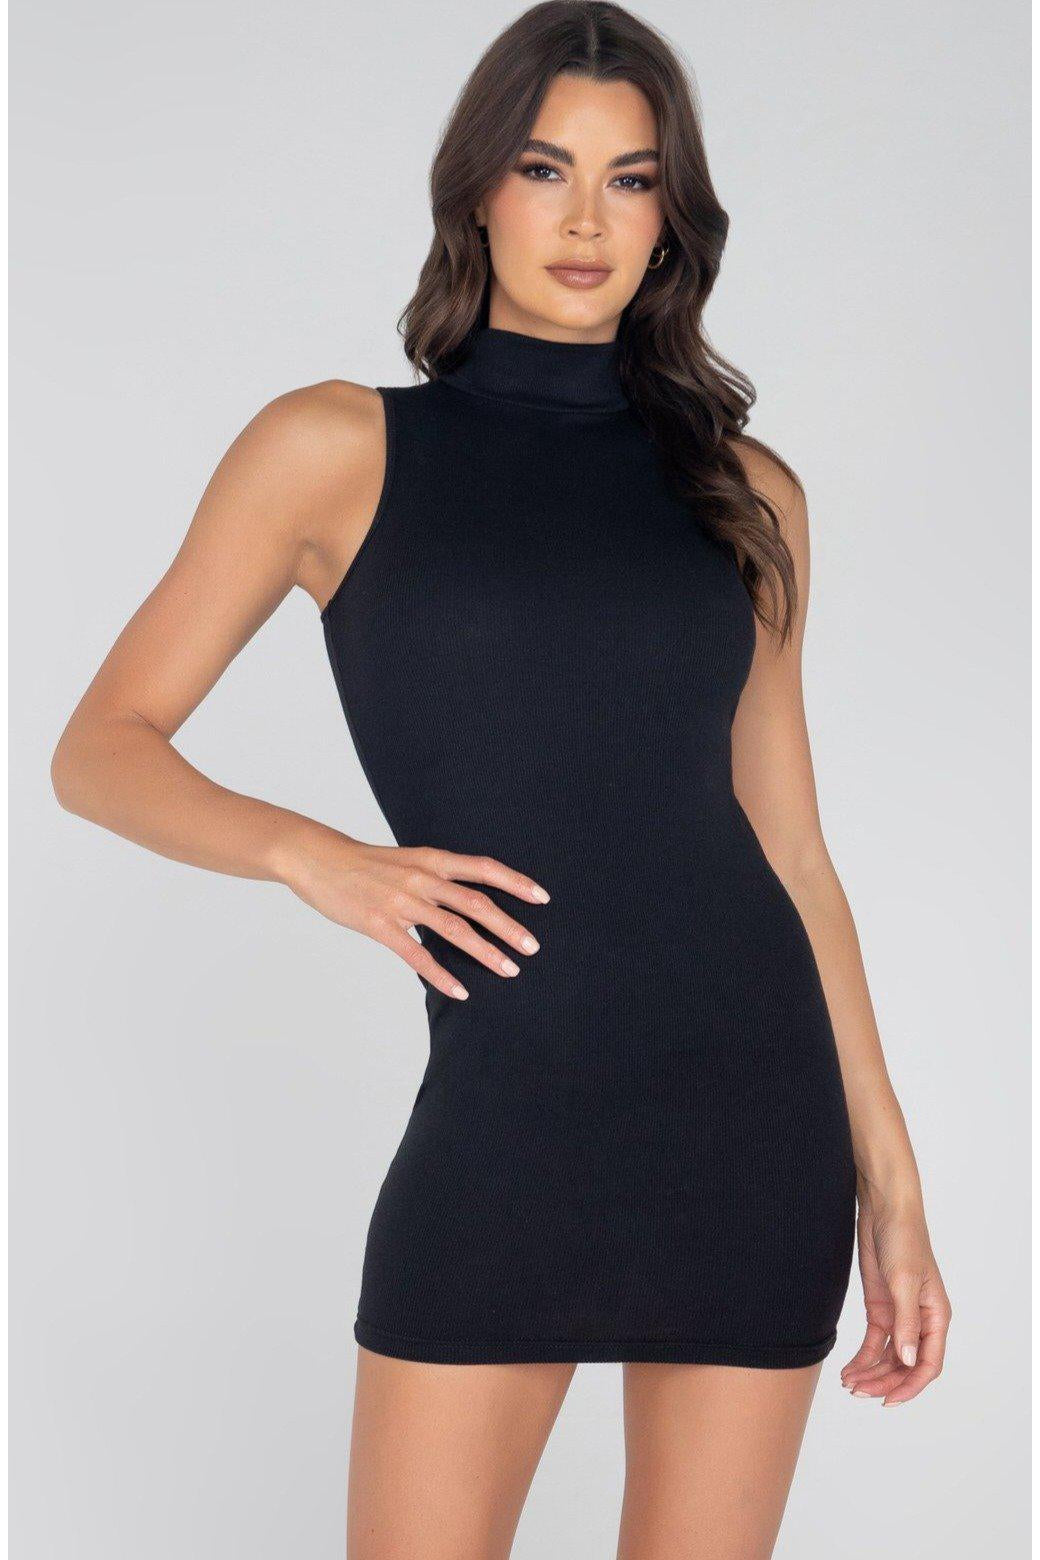 SS-Ribbed Turtle Neck Sleeveless Dress-Clothing-Roma Brand-Black-L-SEXYSHOES.COM